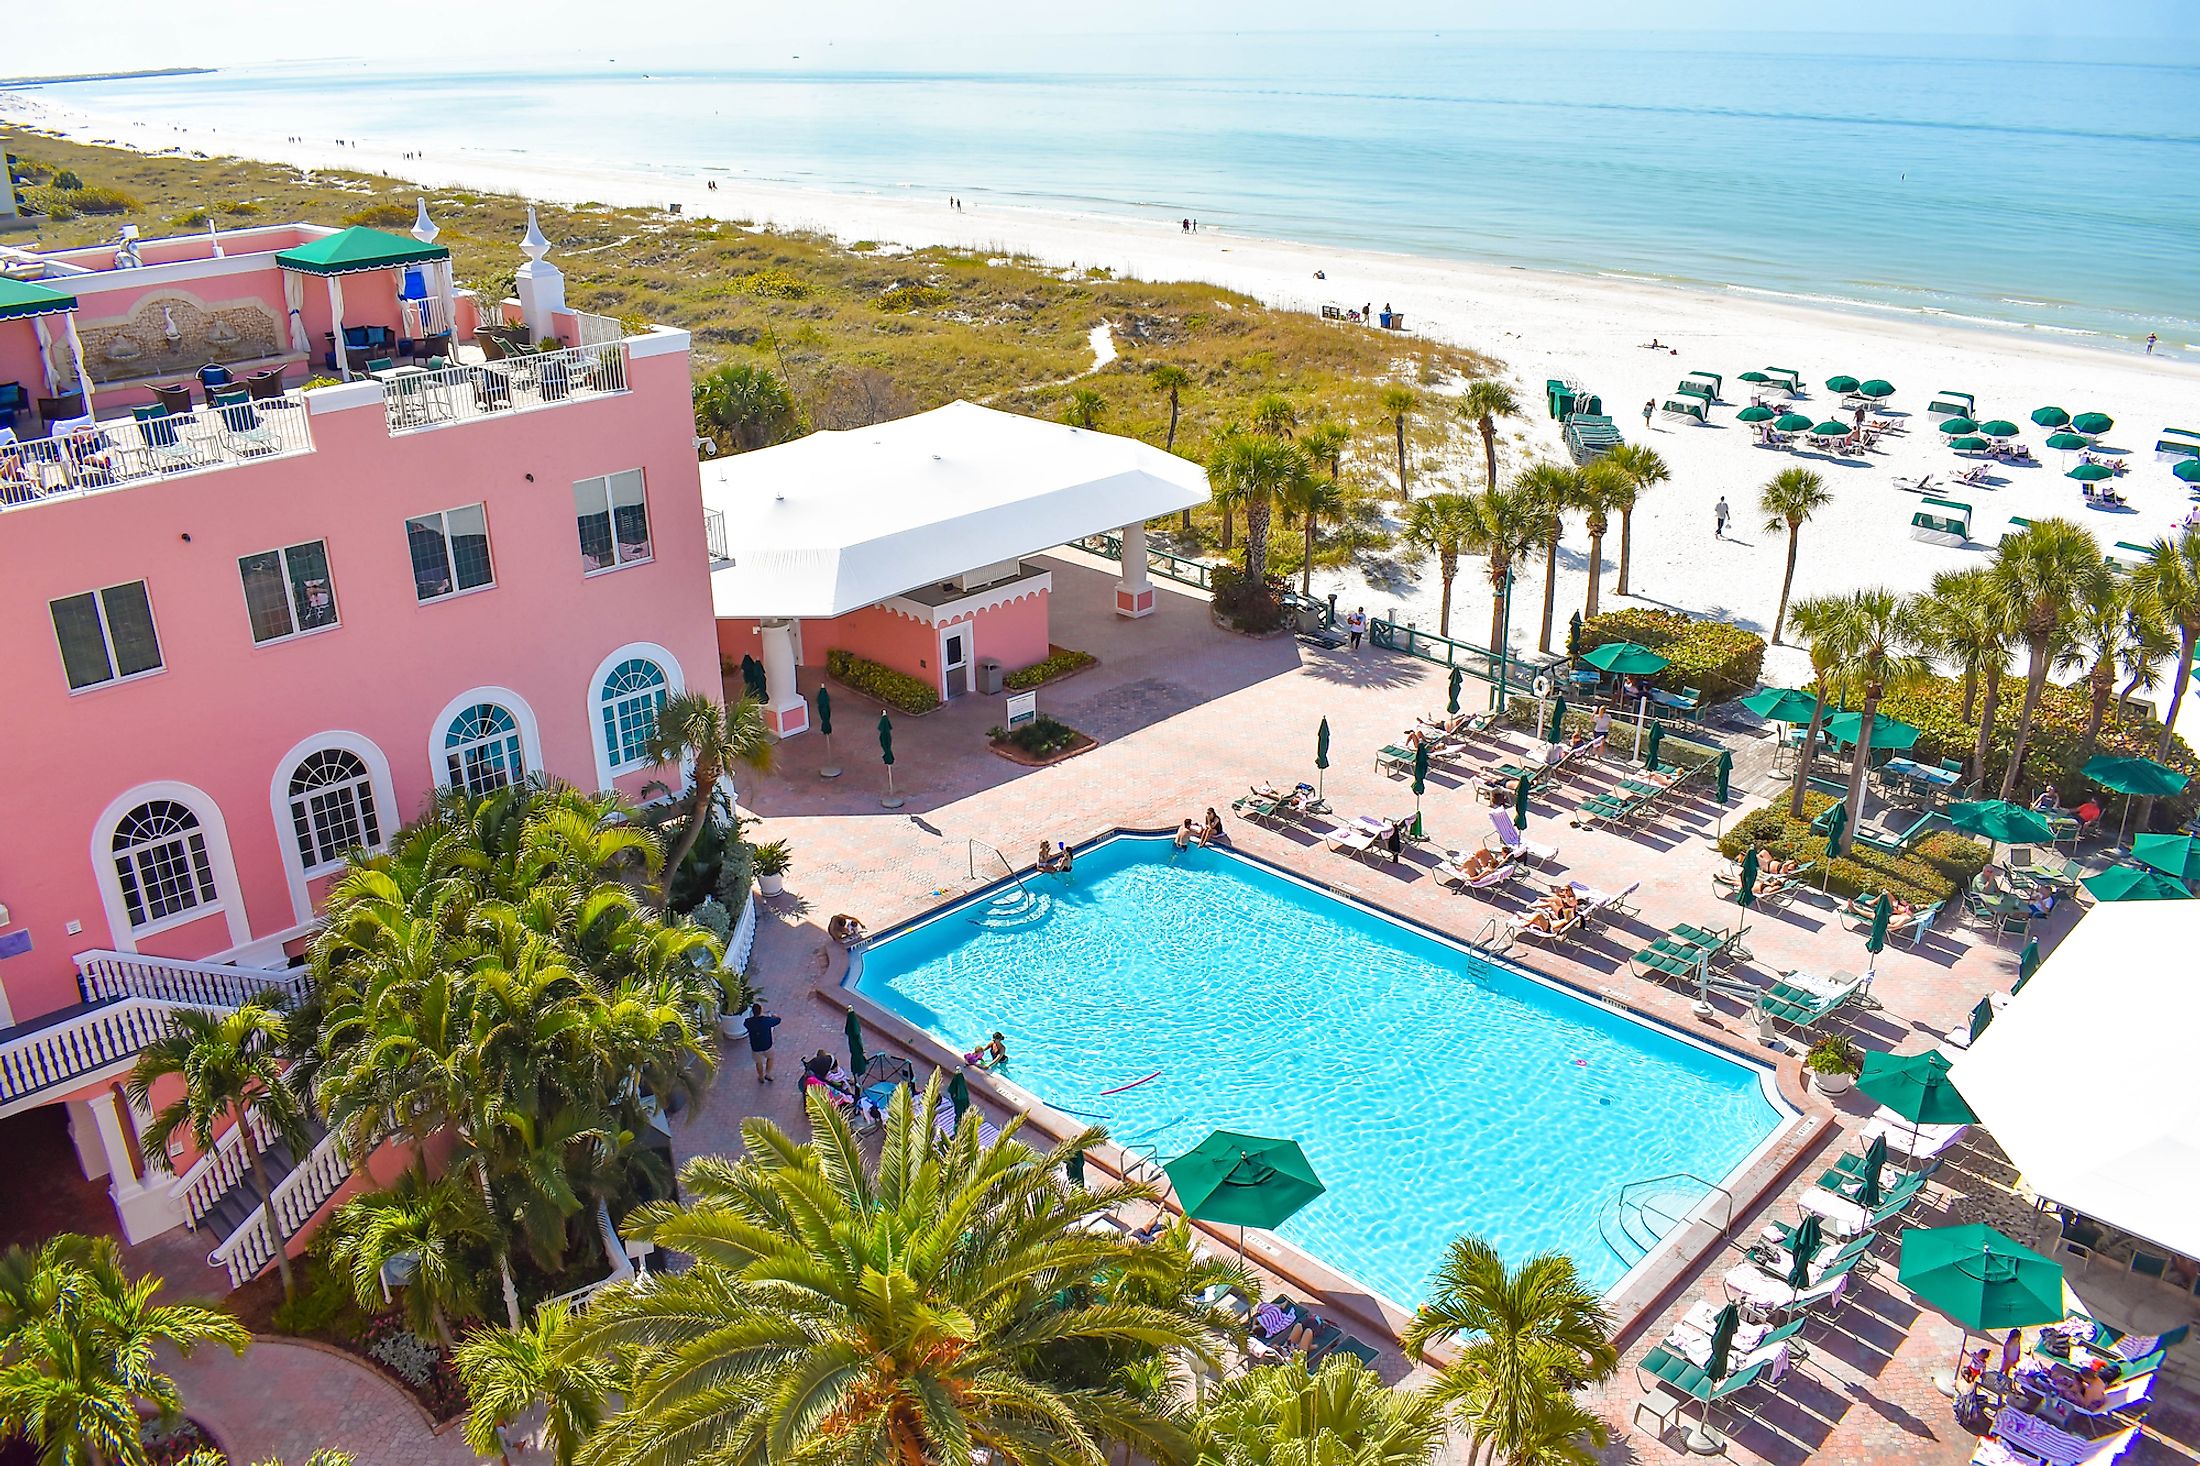 St. Pete Beach, Florida. Editorial credit: VIAVAL TOURS / Shutterstock.com